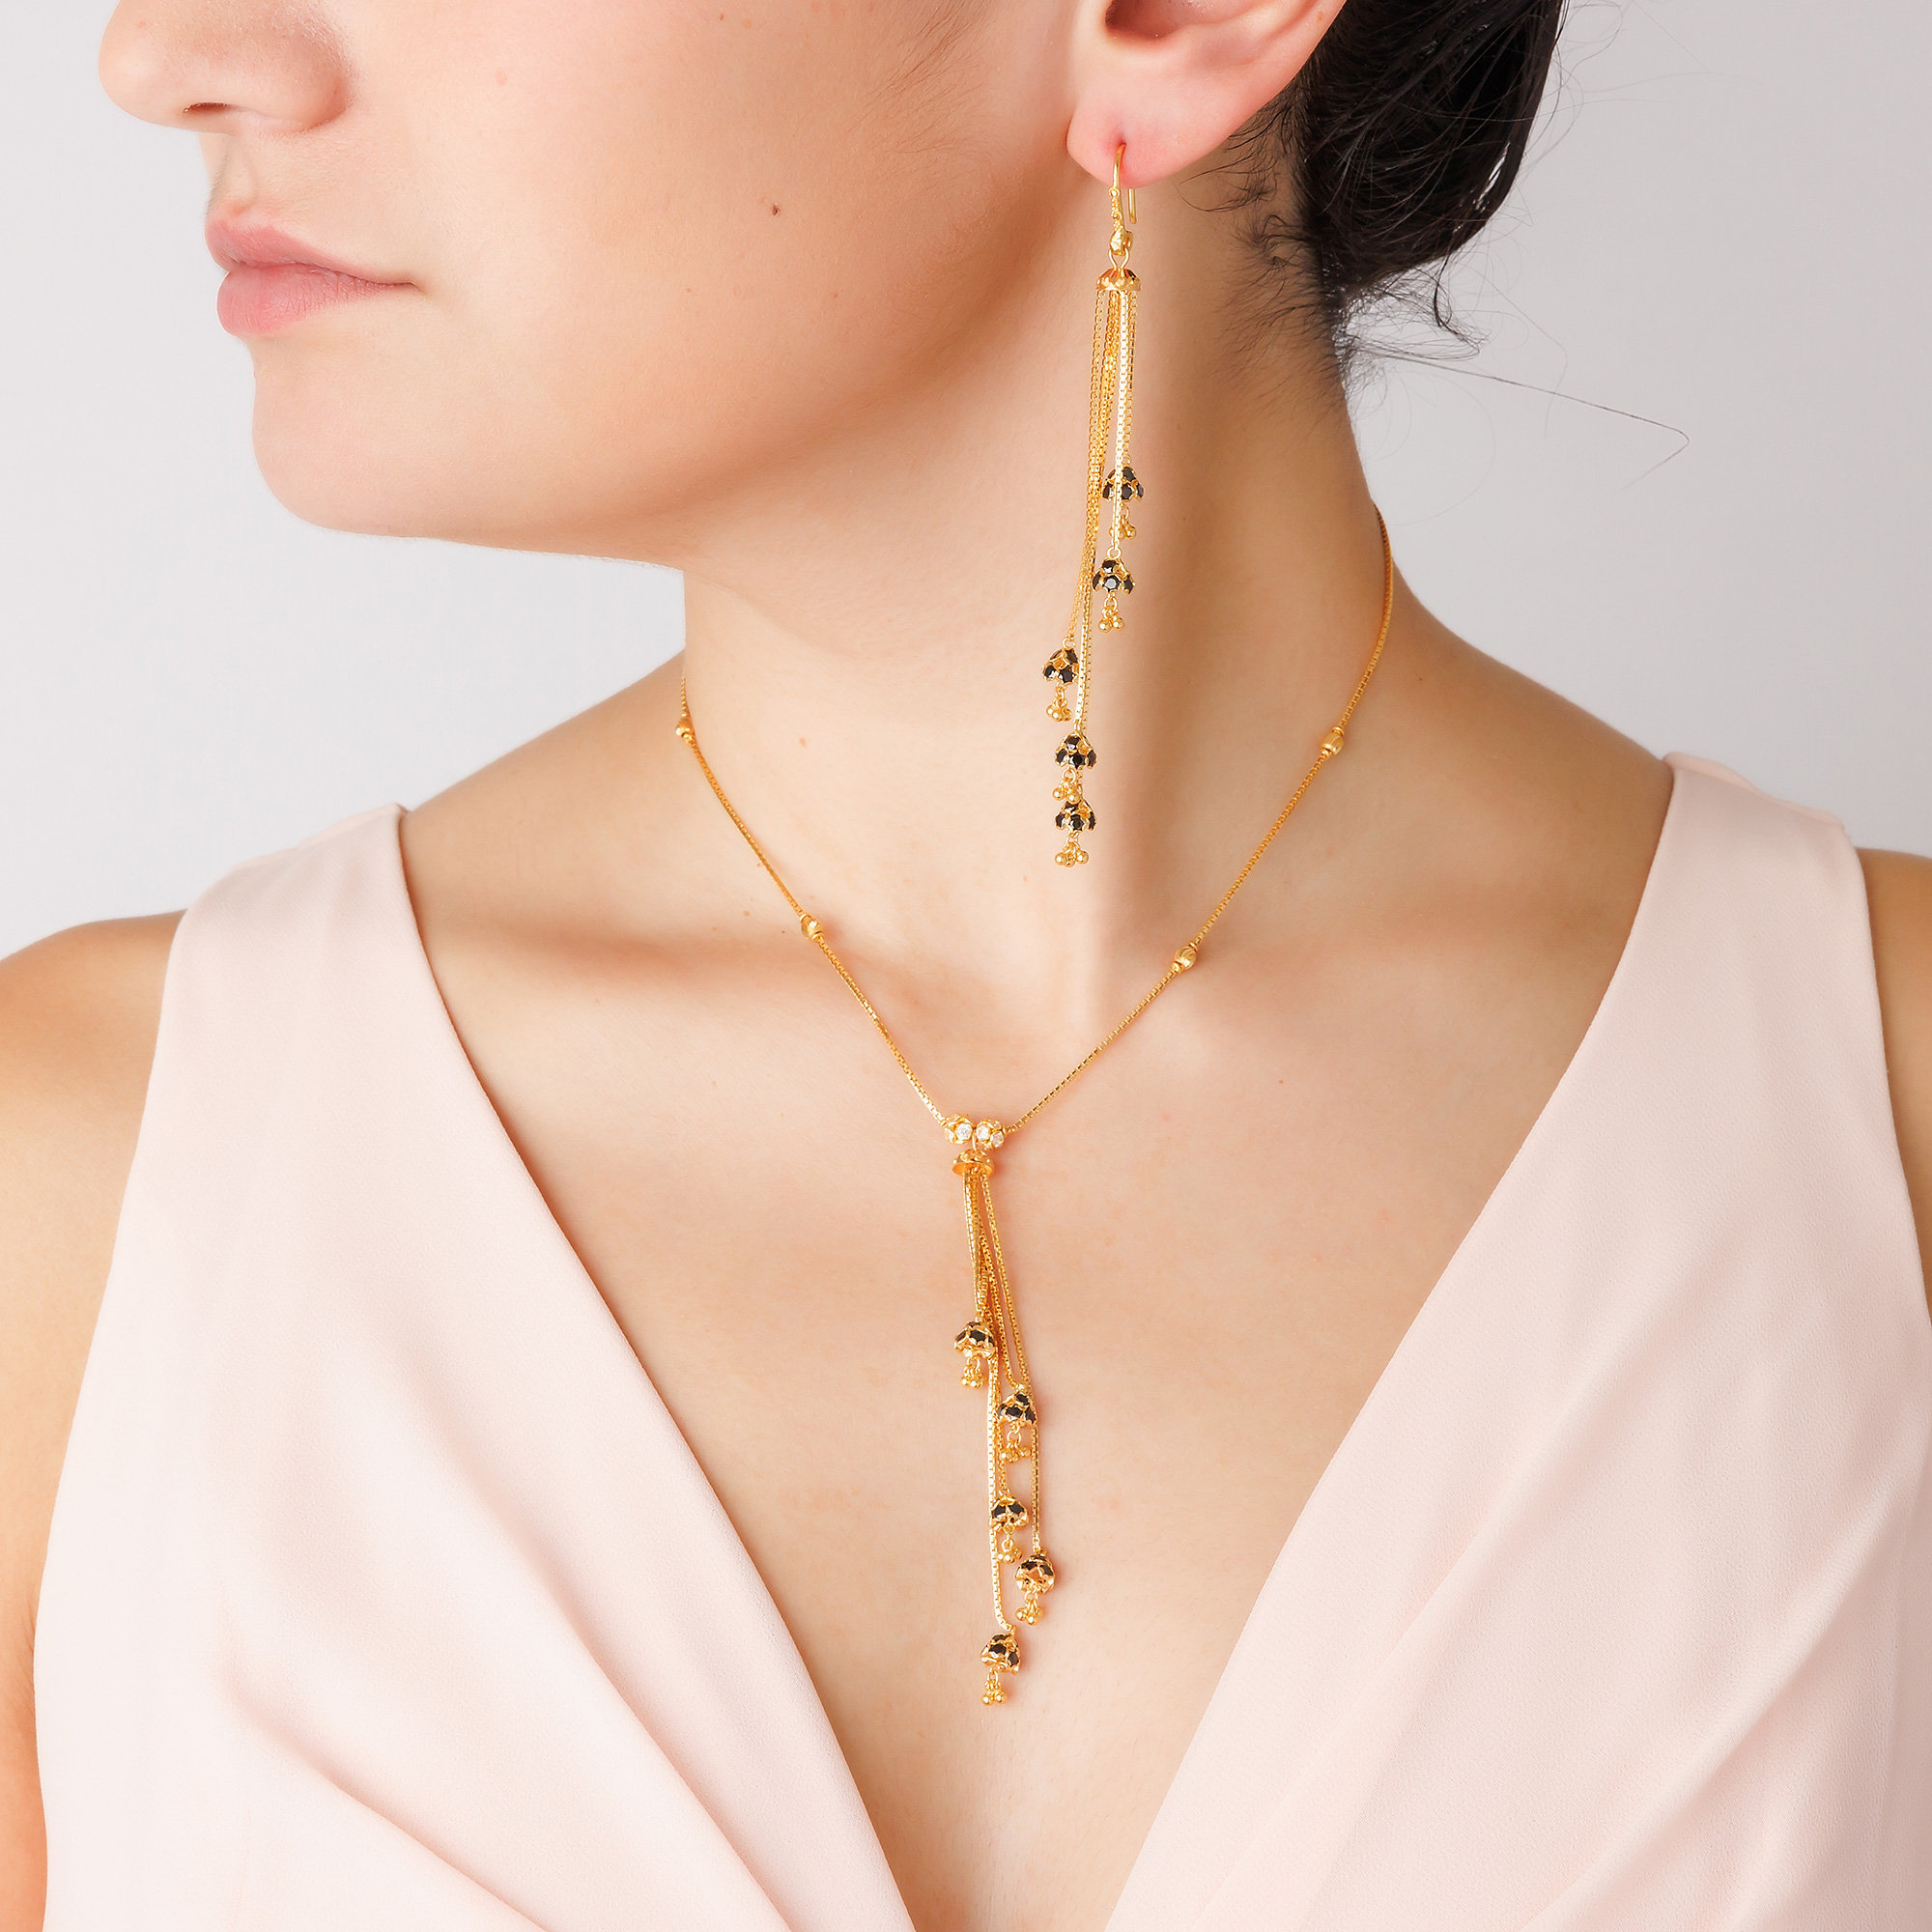 Fashion earring chain necklace set, women| Alibaba.com